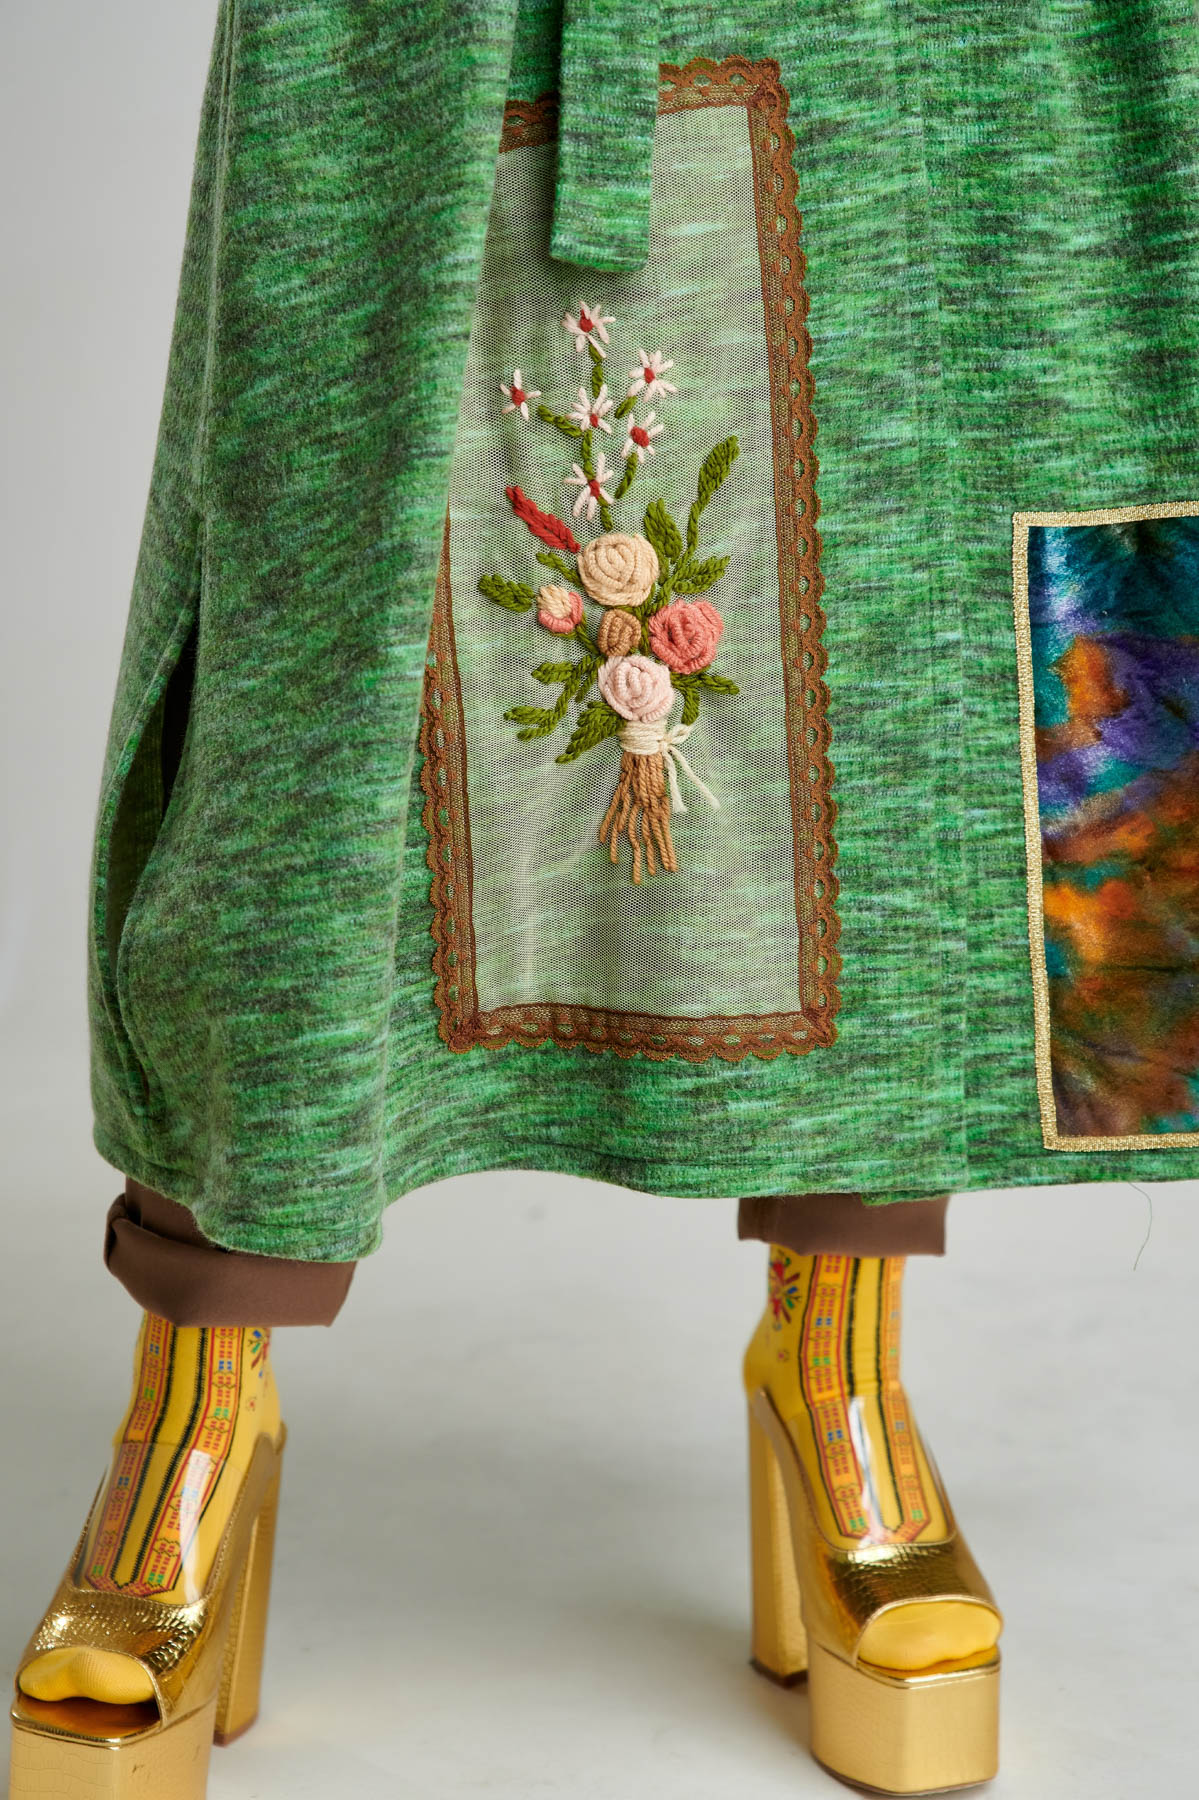 DALY versatile green knit poncho. Natural fabrics, original design, handmade embroidery